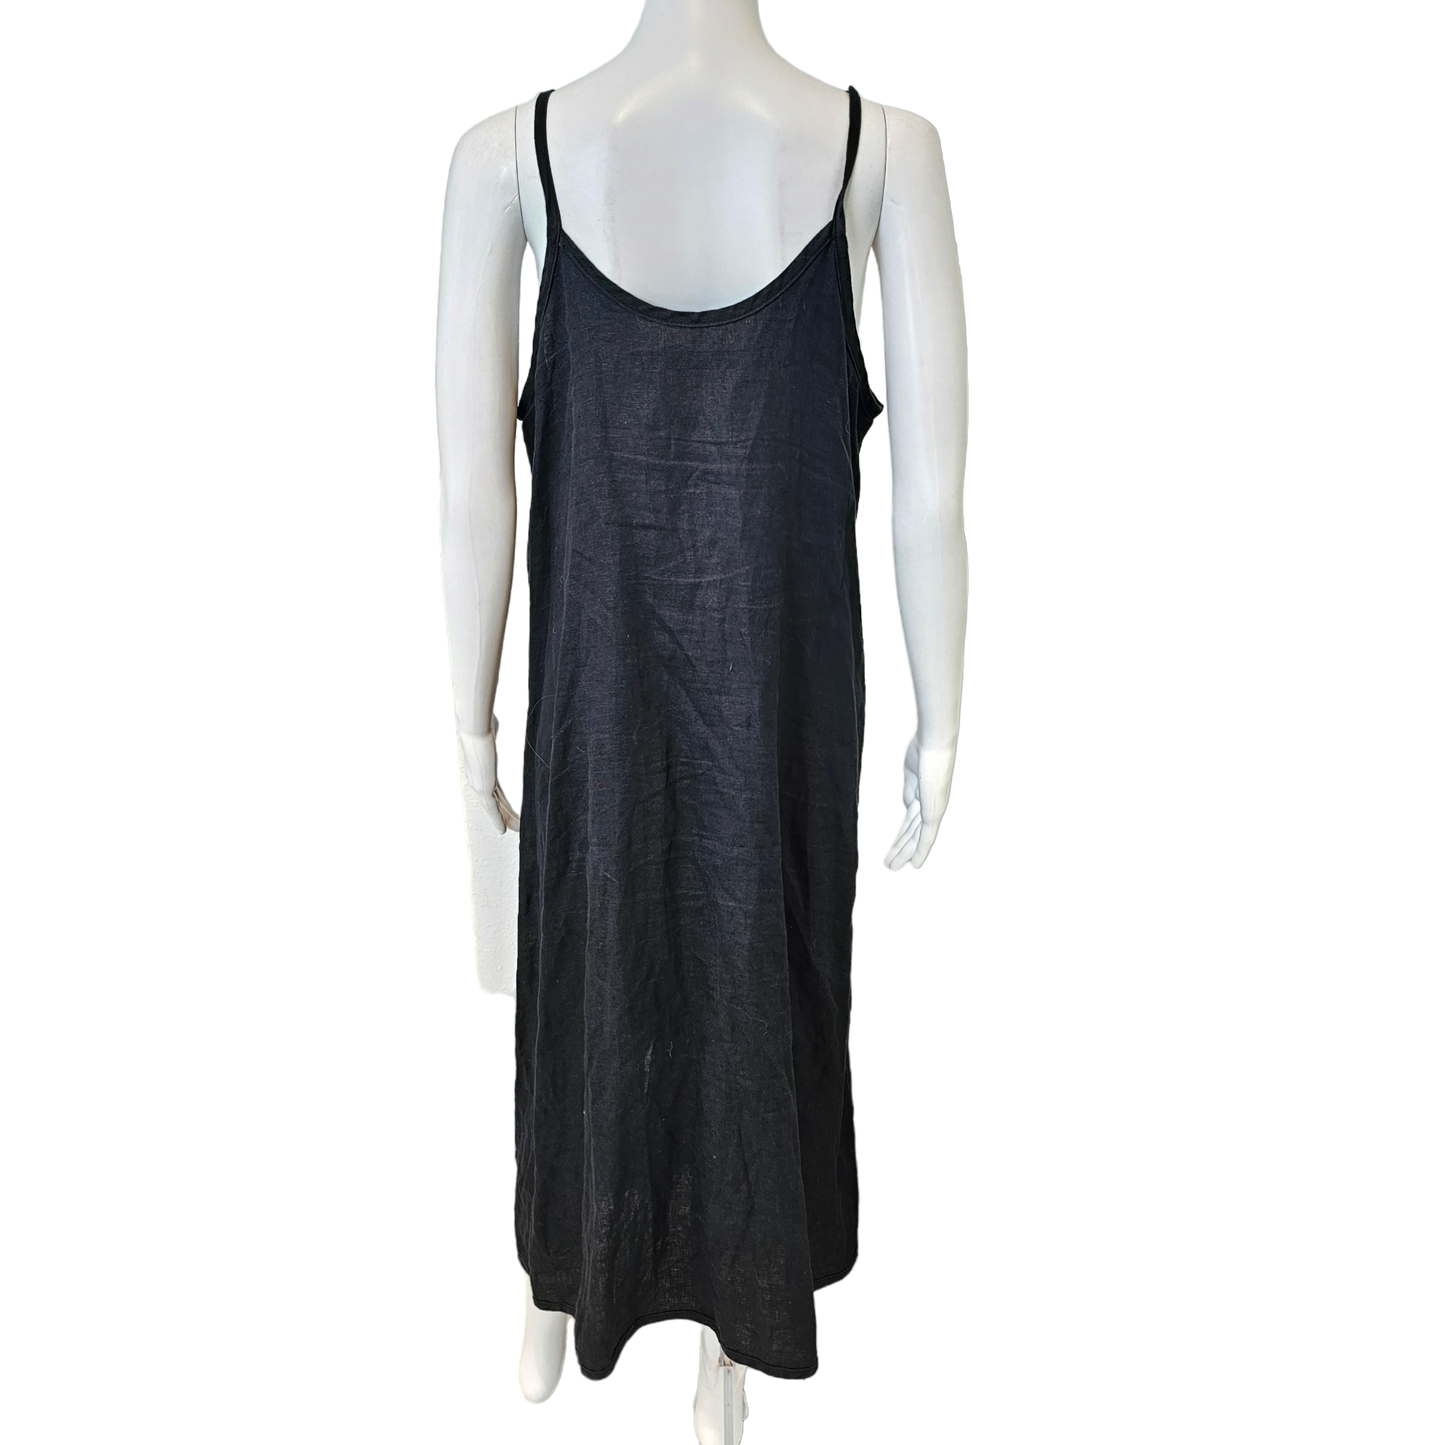 Dress Designer By CYNTHIA ASHBY Size: S